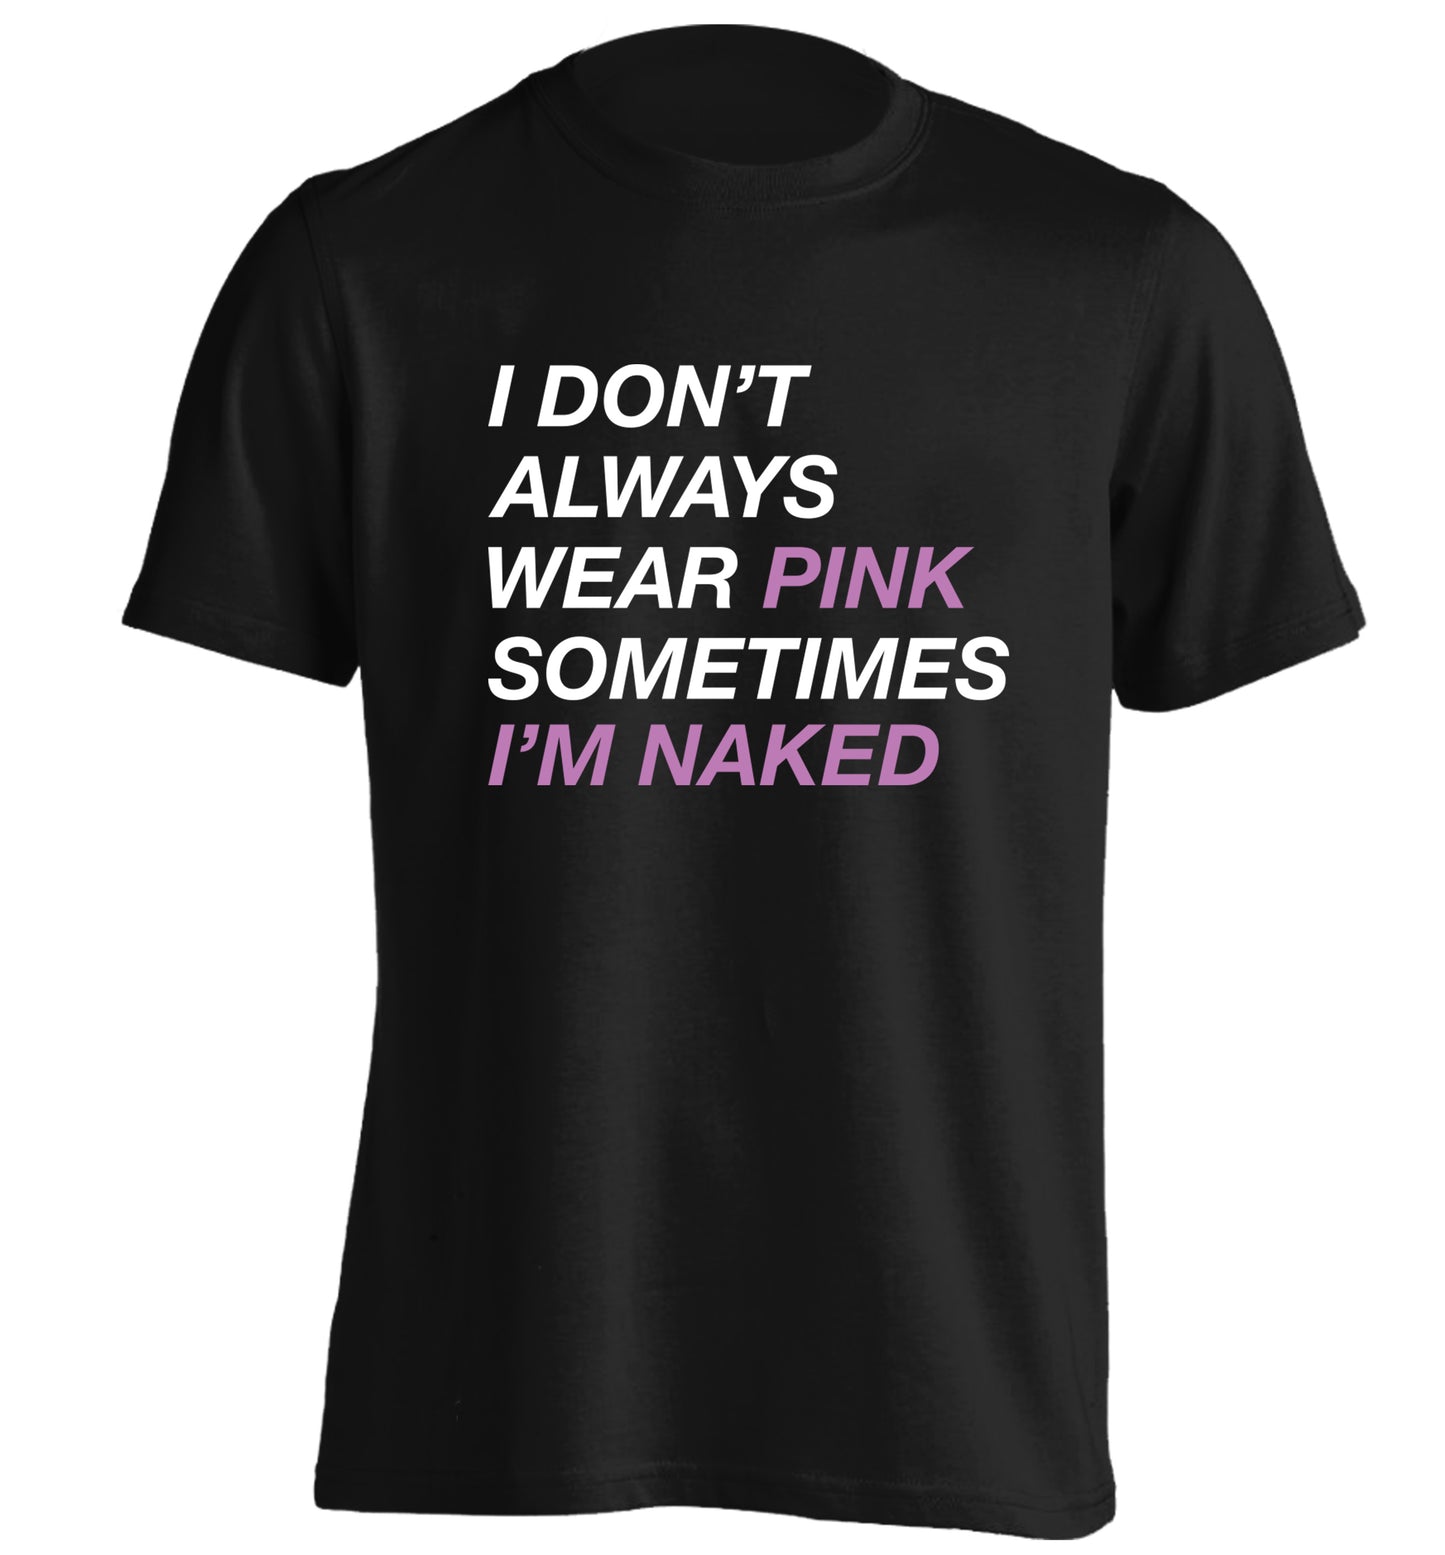 I don't always wear pink sometimes I'm naked adults unisex black Tshirt 2XL